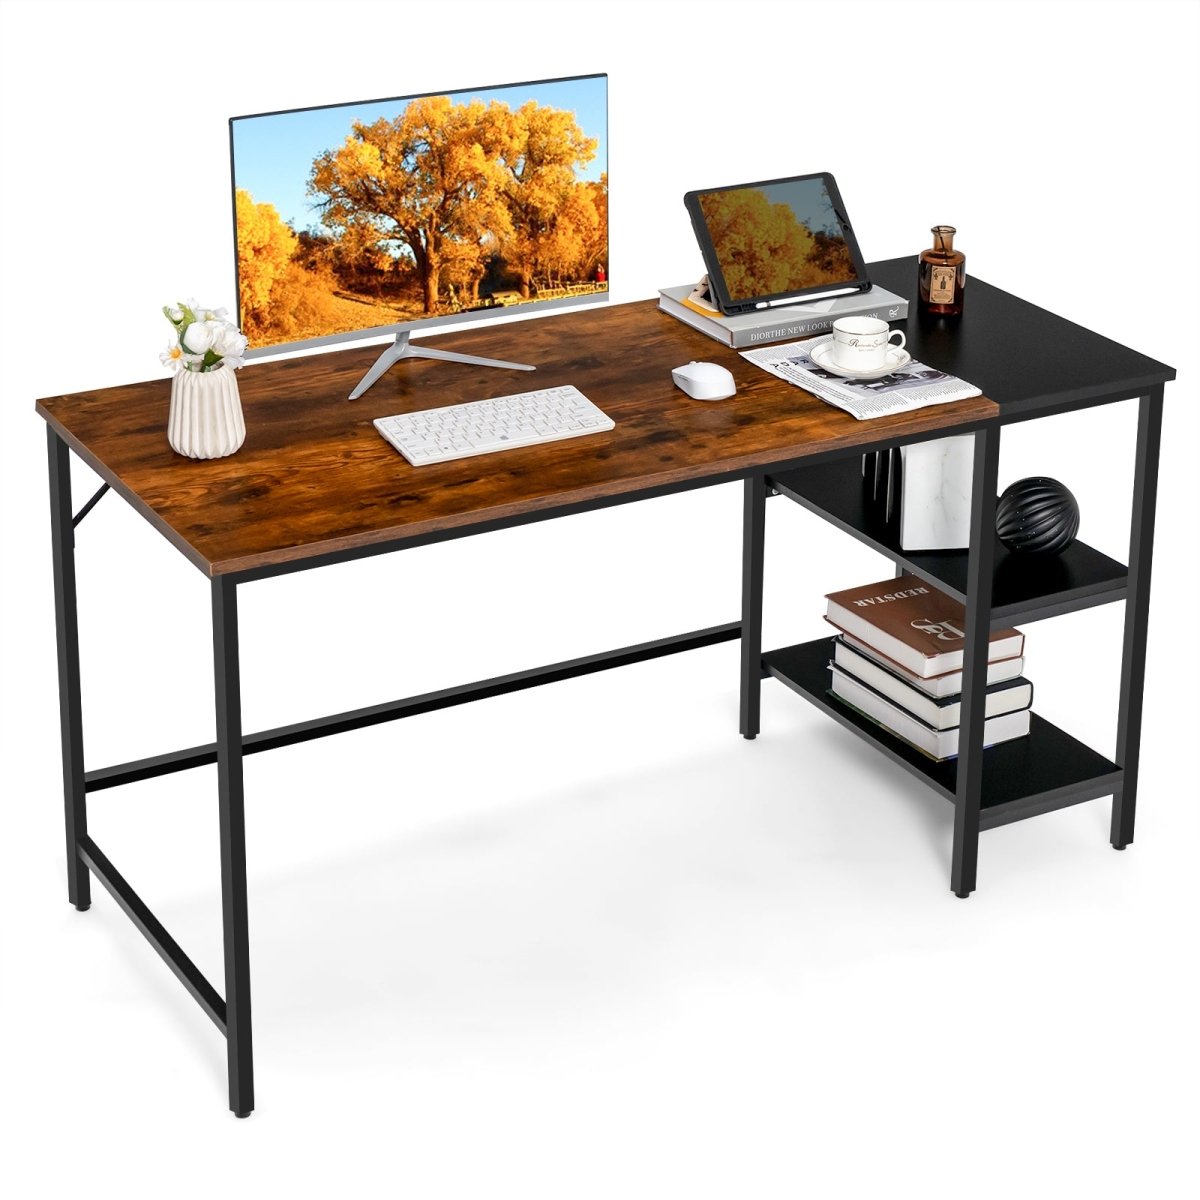 1.4m Black and Oak Computer Desk